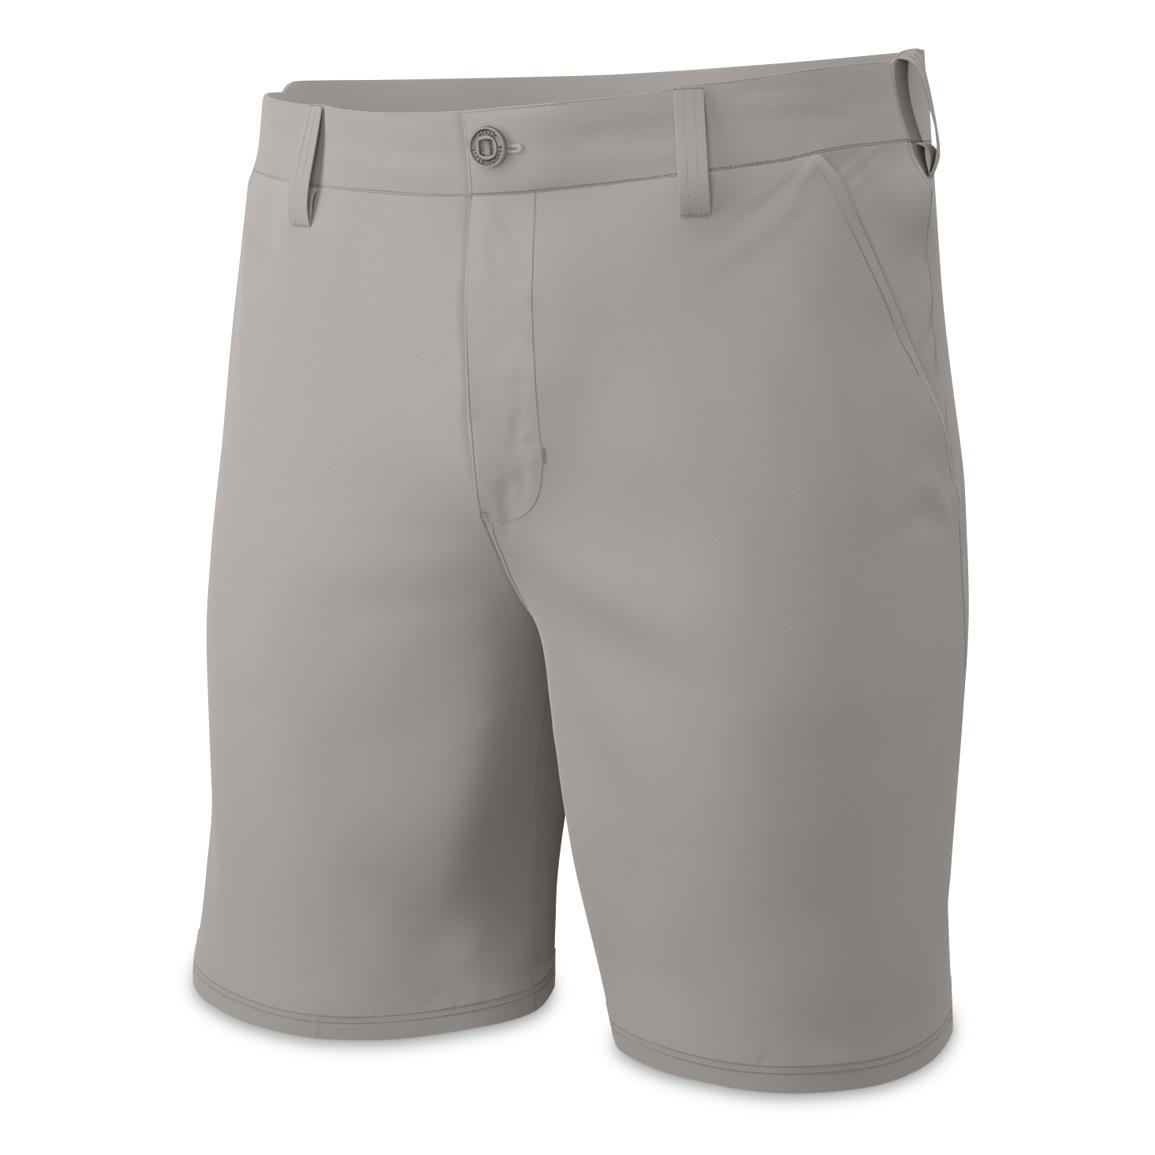 Huk Pursuit Shorts - 736462, Shorts at Sportsman's Guide